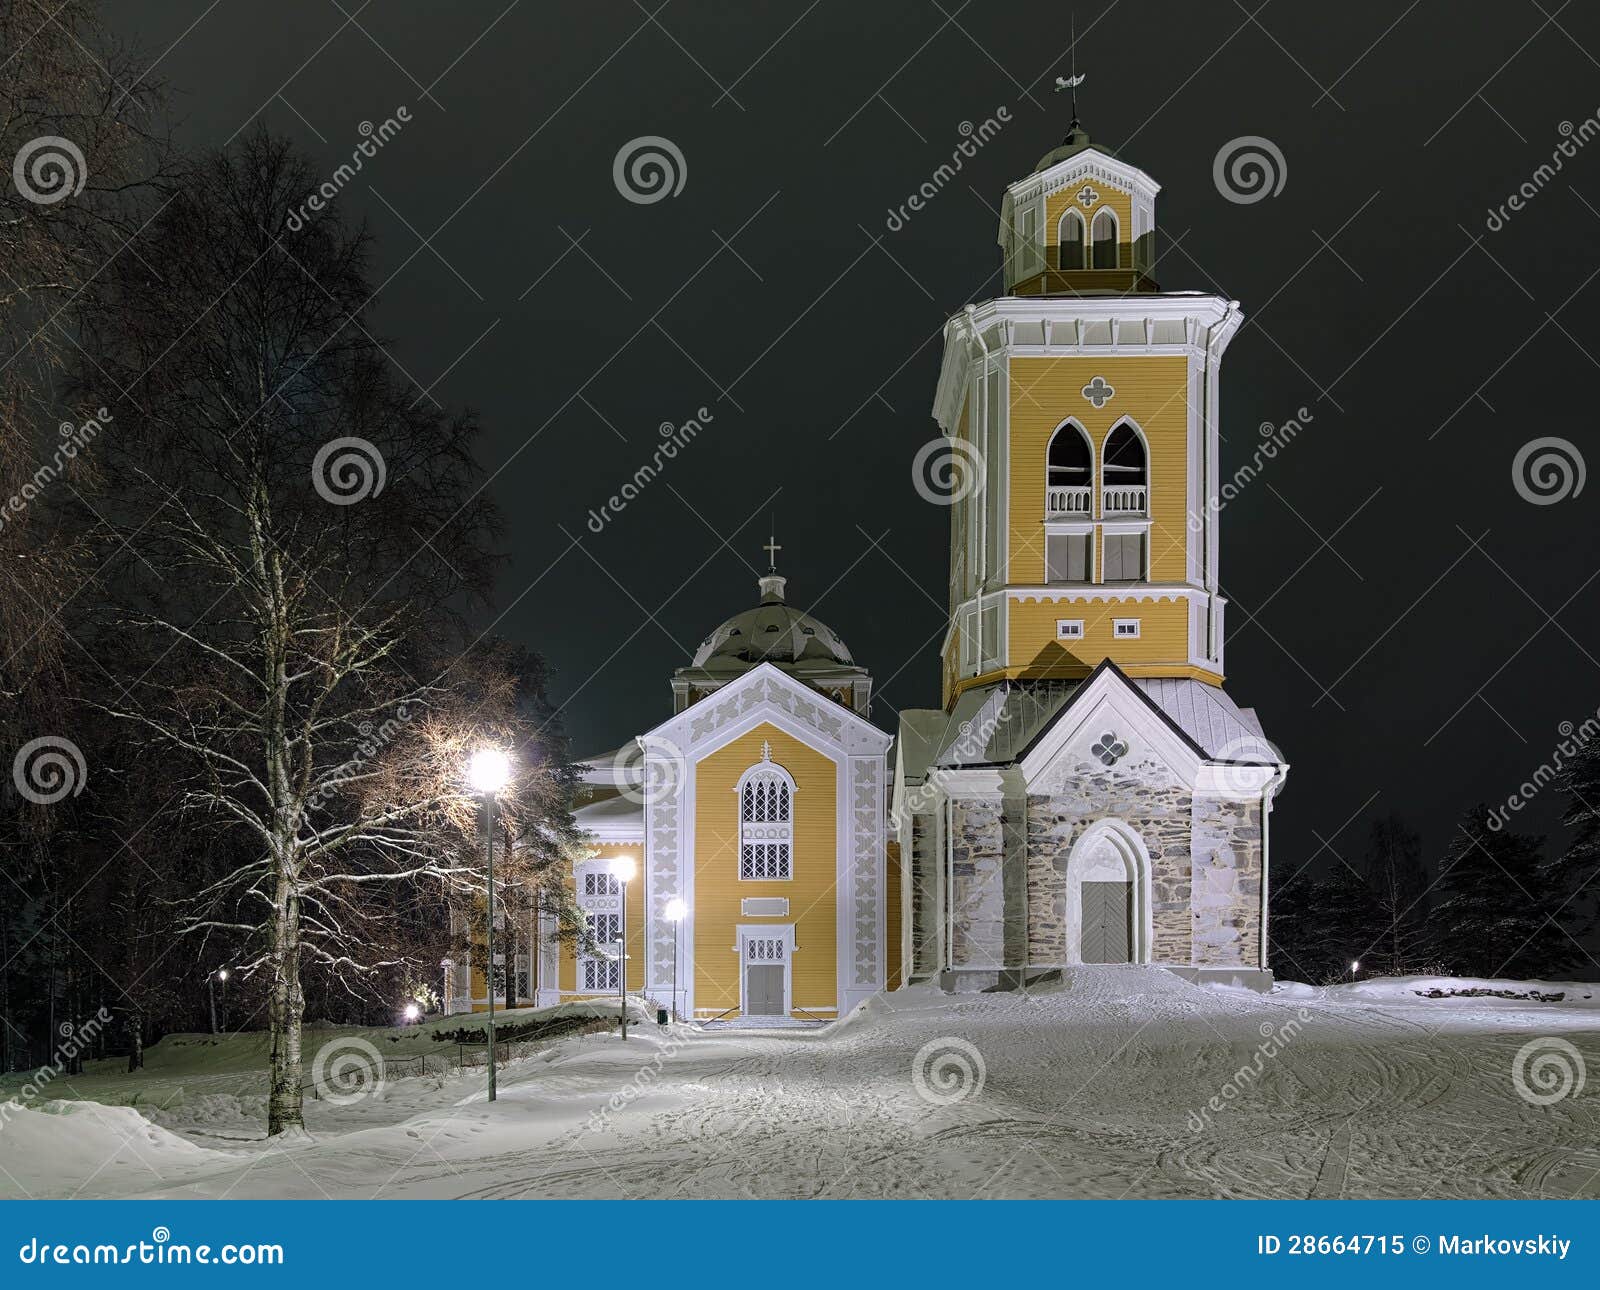 Kerimaki Church In Winter Night Finland Stock Image Image Of Facade